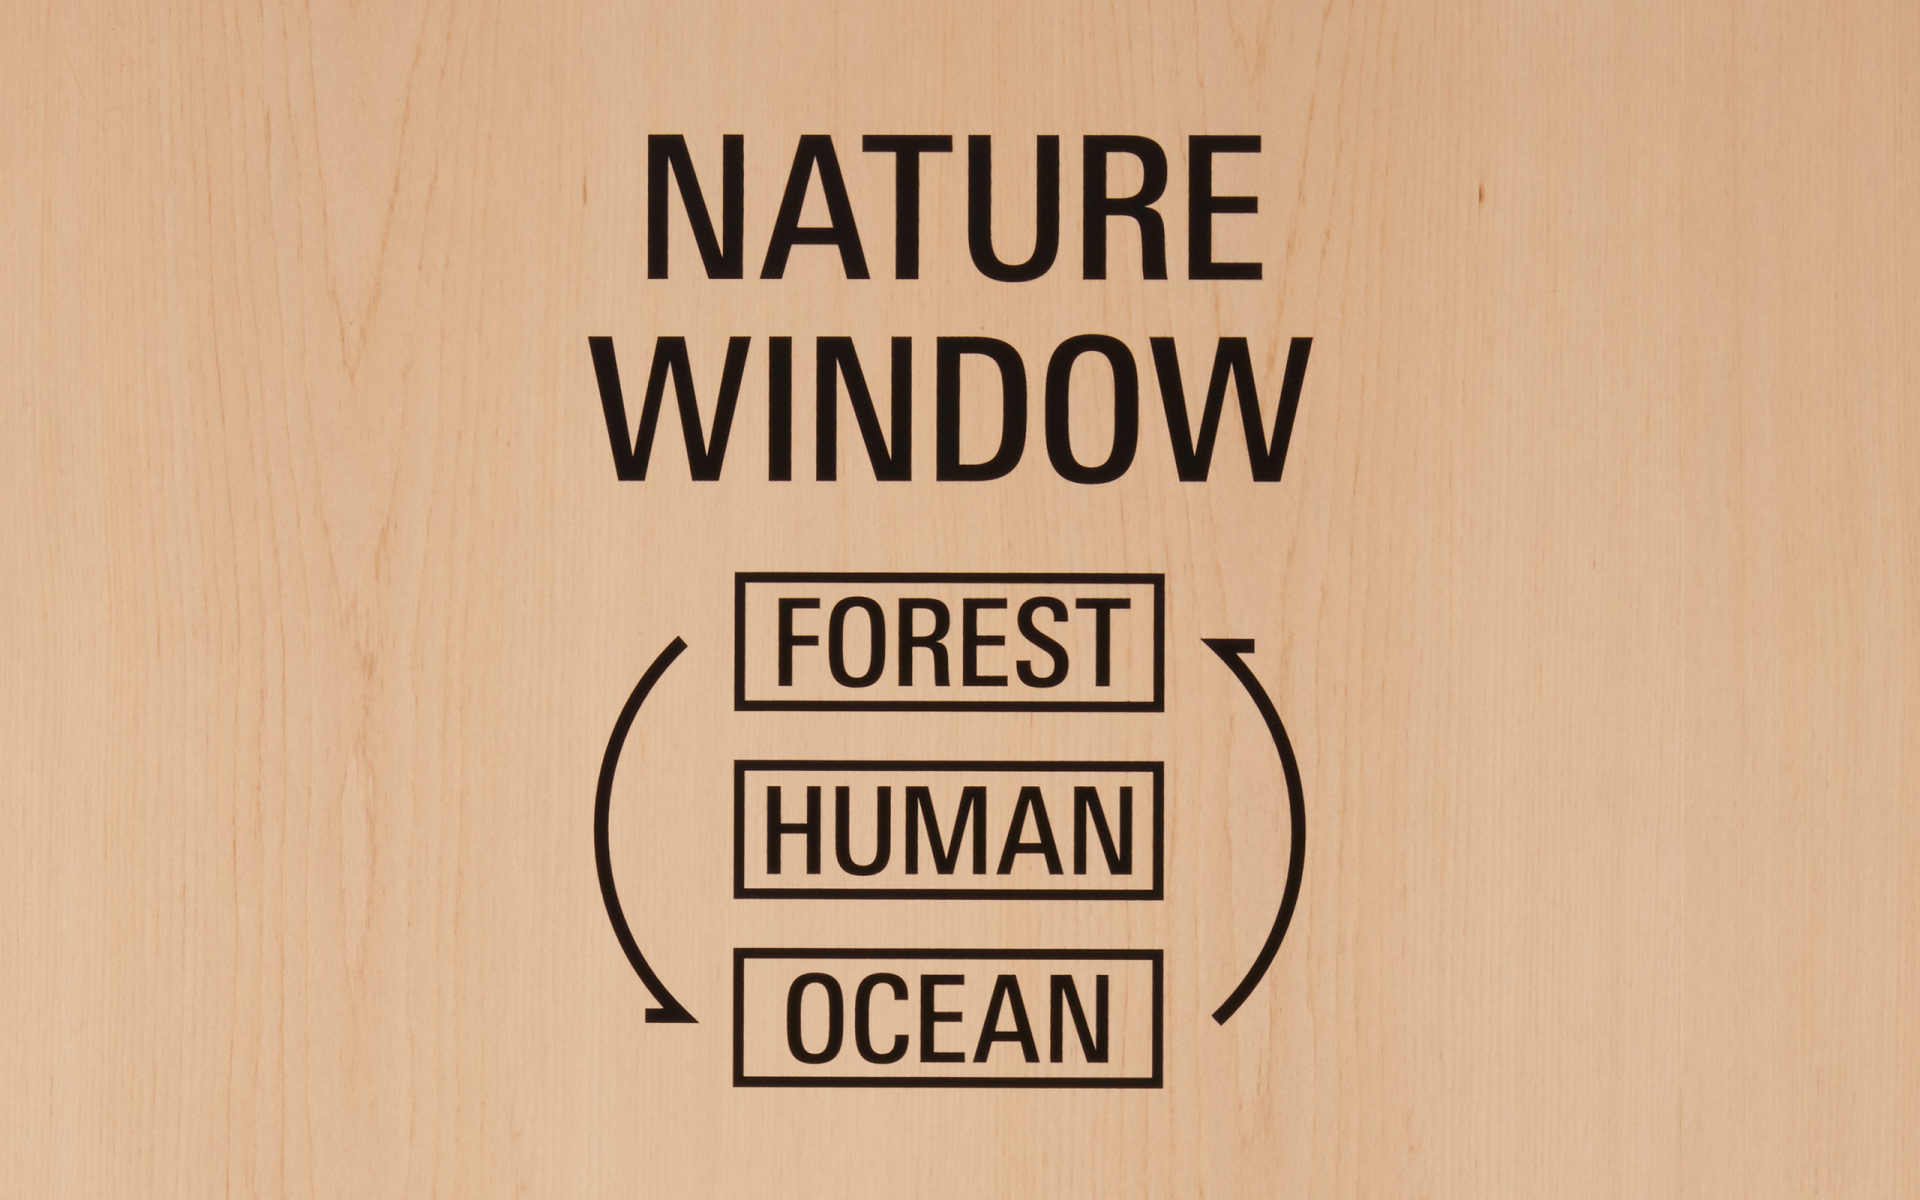 NATURE WINDOW